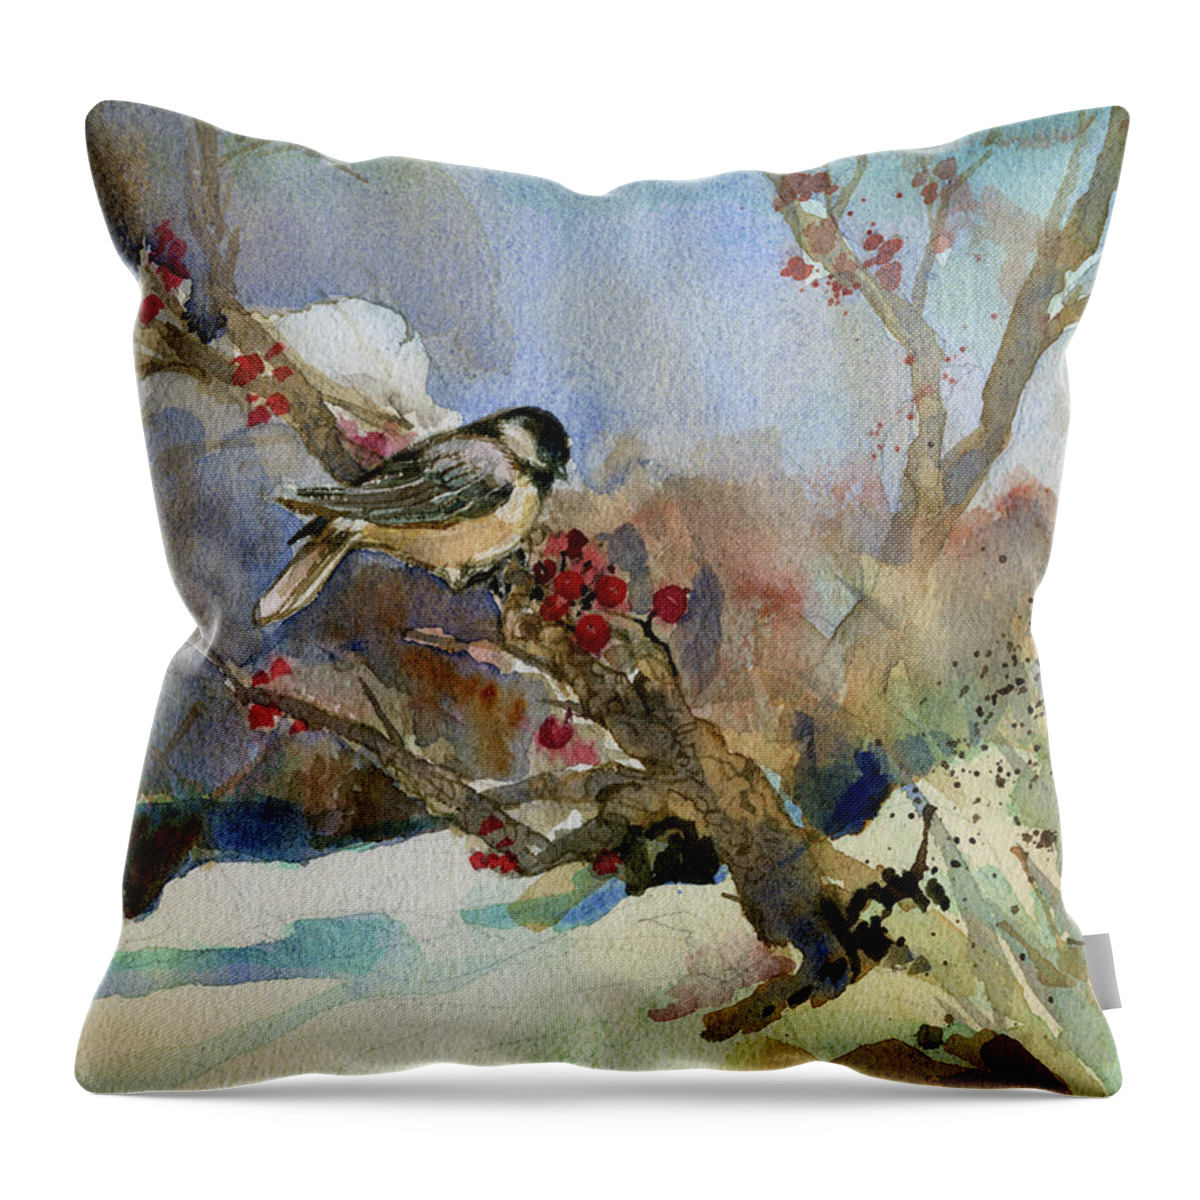 Garden Gate Throw Pillow featuring the painting Chickadee by Garden Gate magazine